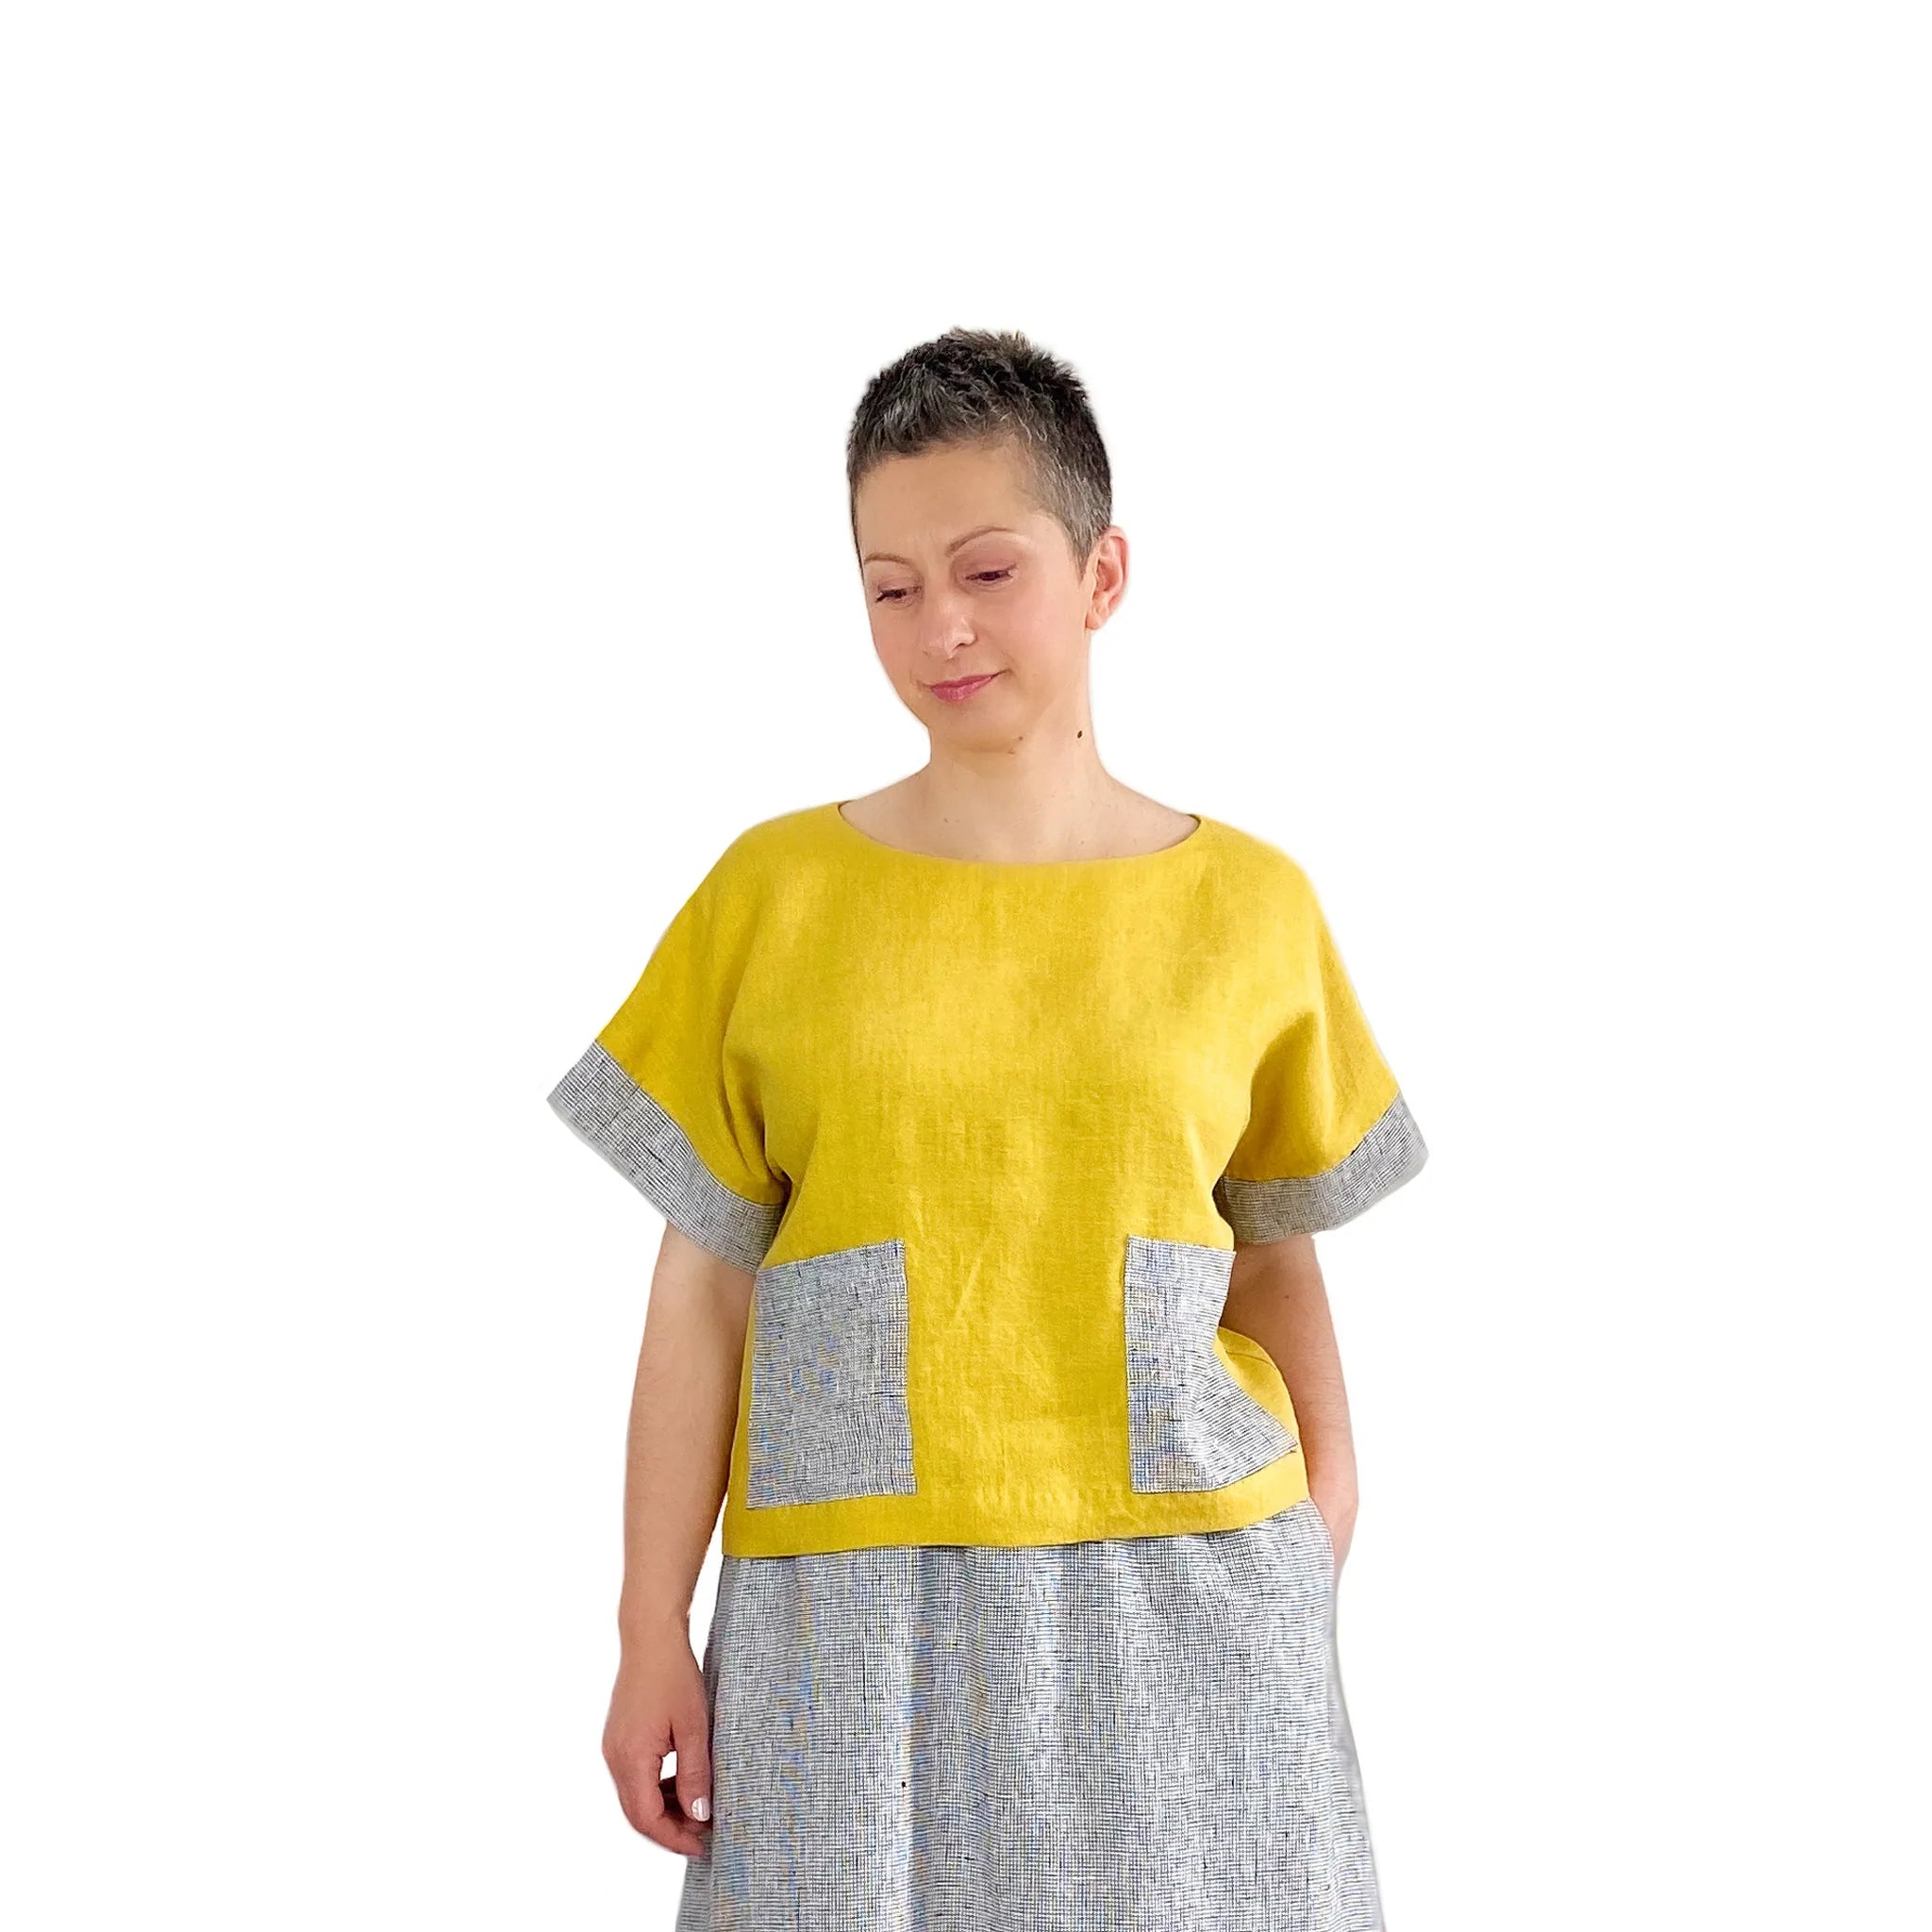 Dhurata Davies - Edith Dress, Skirt and Top - Paper Sewing Pattern